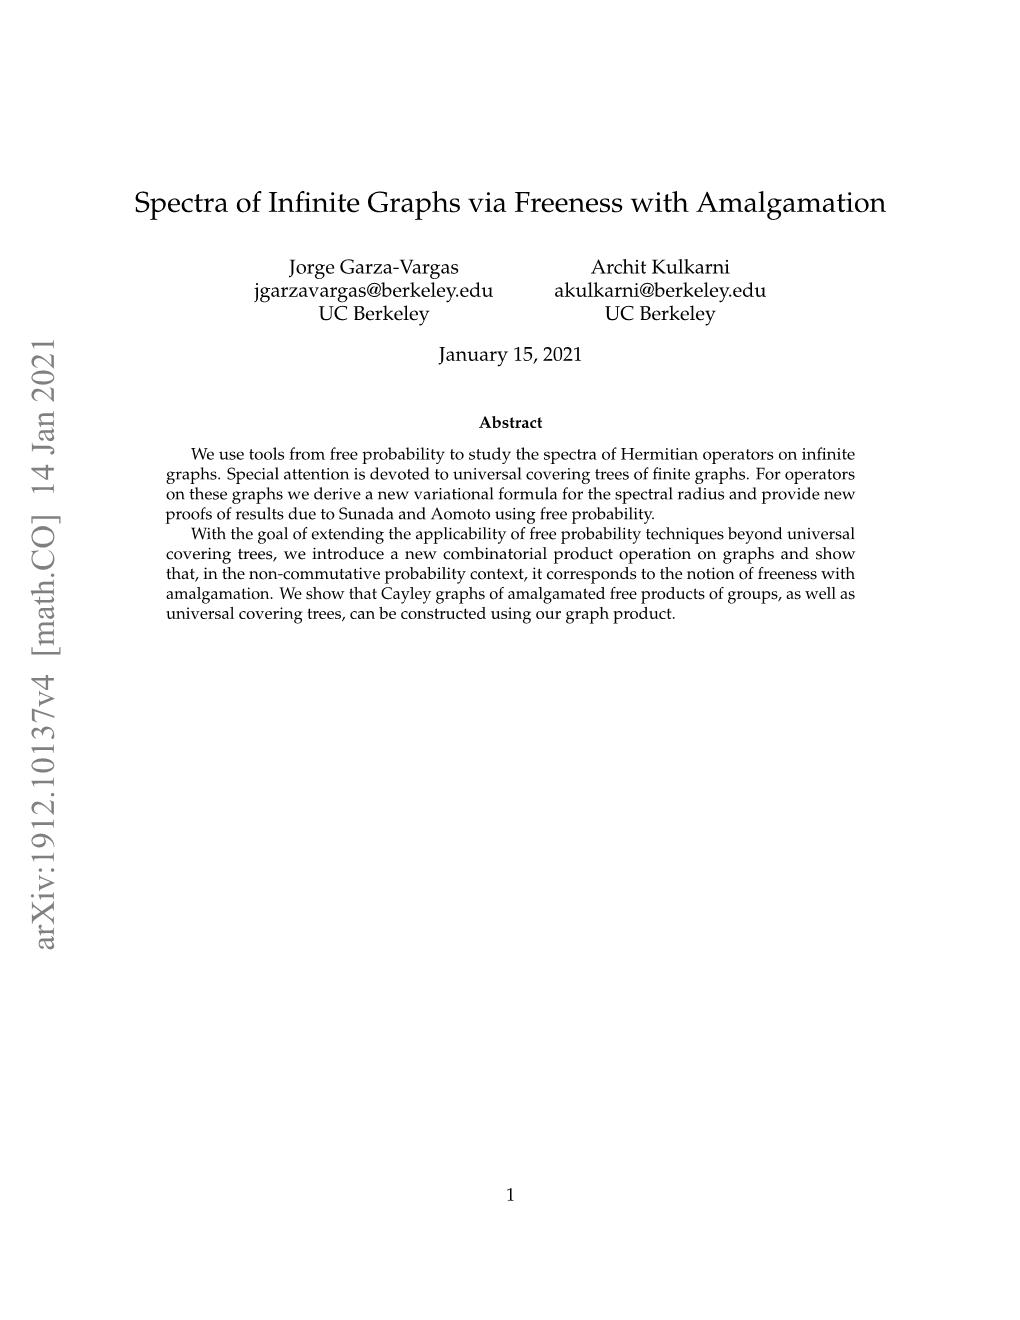 Spectra of Infinite Graphs Via Freeness with Amalgamation